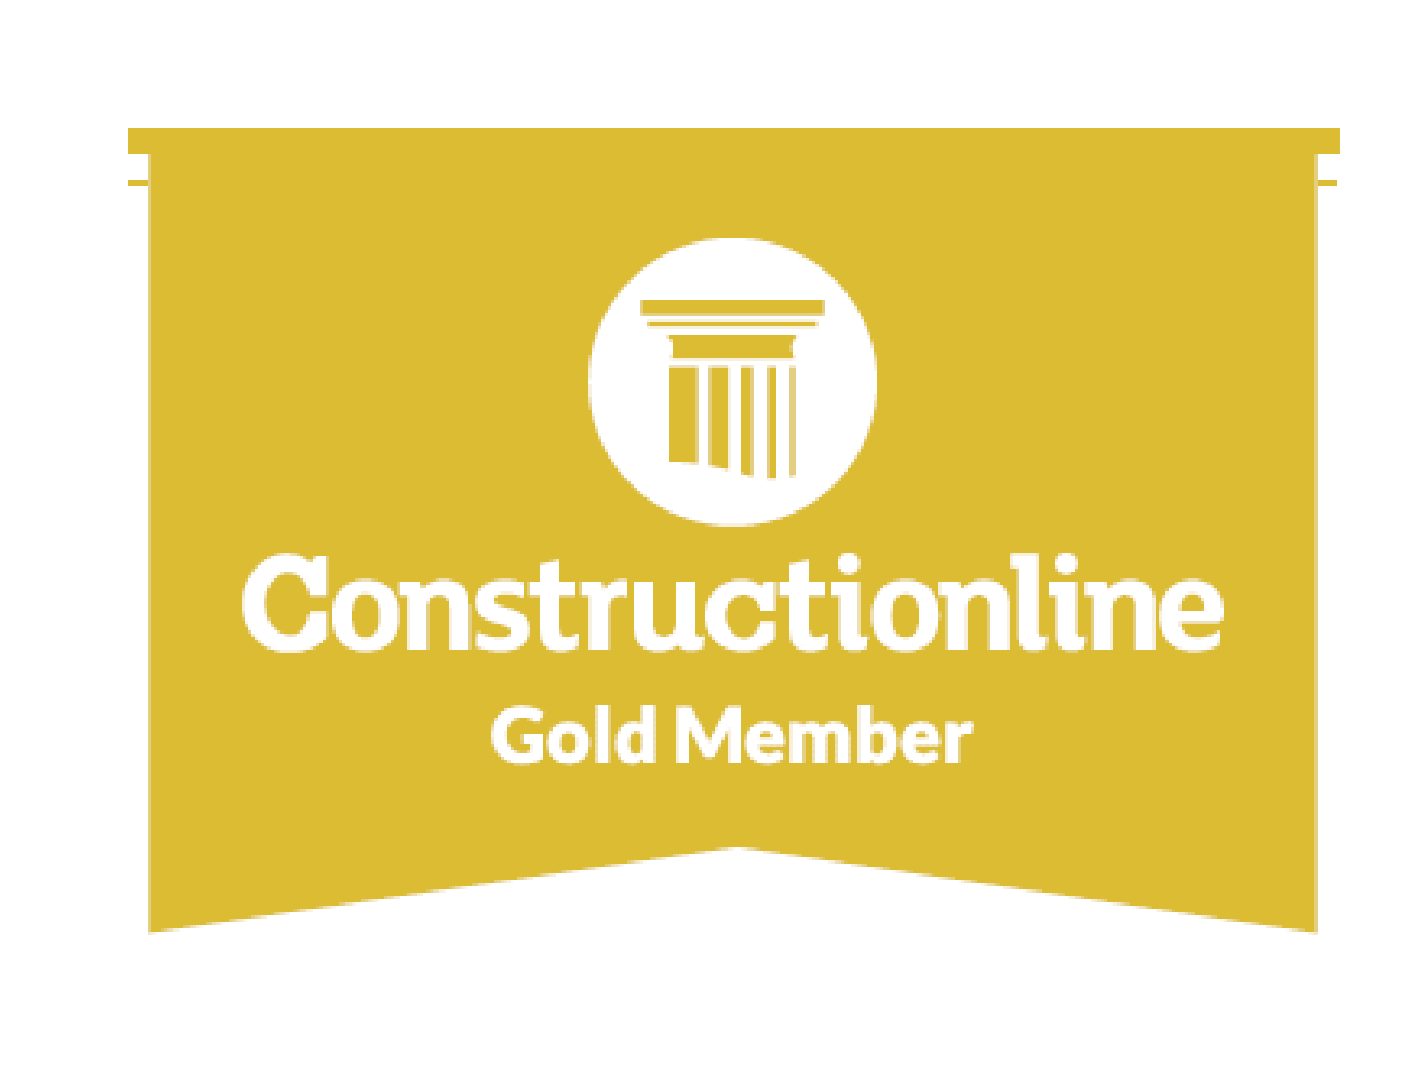 Constructiononline Gold